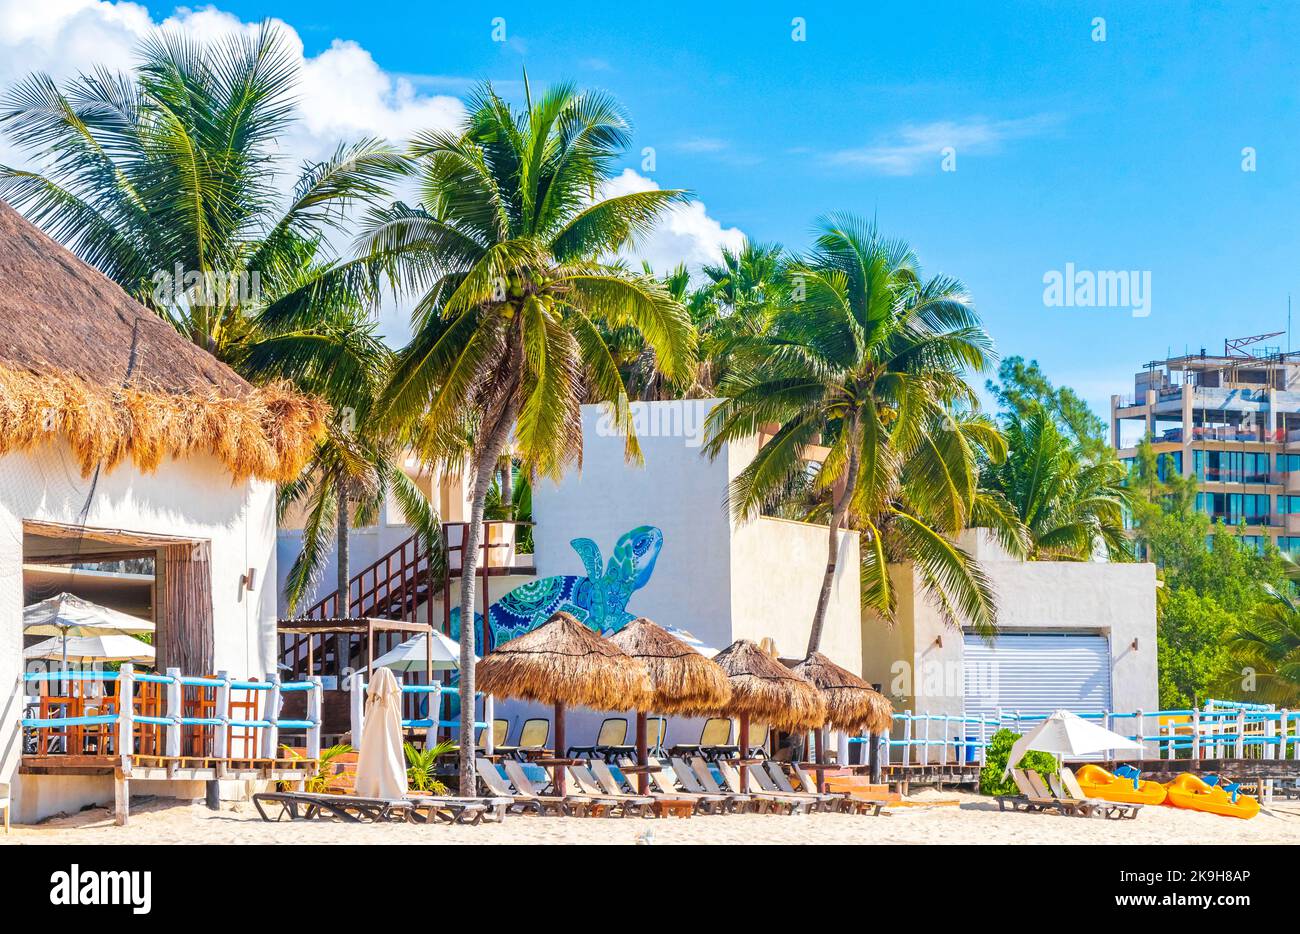 Playa Maya by Mij - Beachfront Hotel  : Sun-Kissed Paradise Retreat